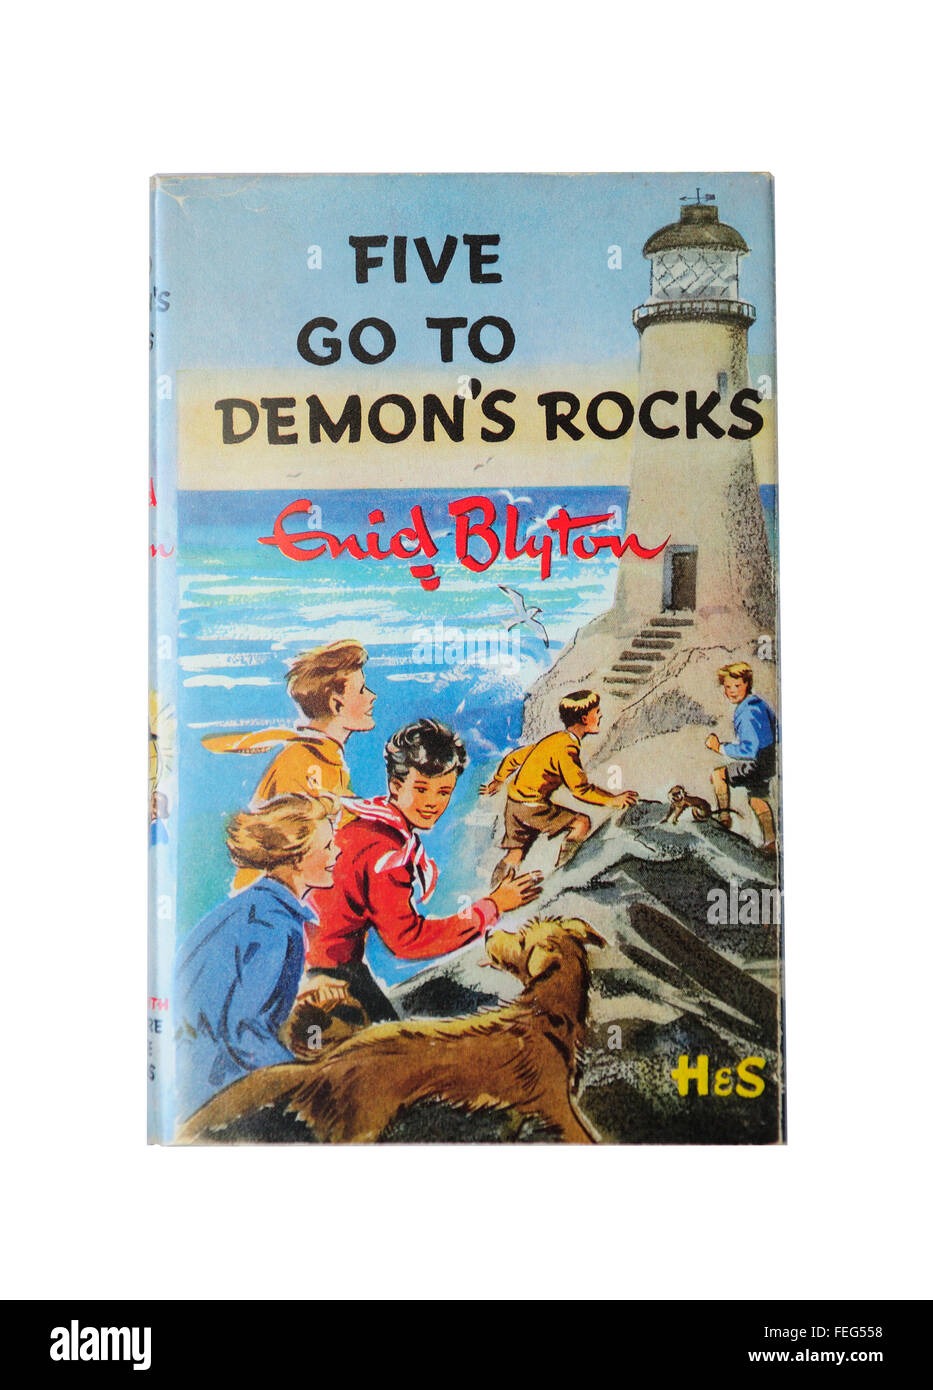 Enid Blyton's 'Five go to Demon's Rocks' nineteenth Famous Five book, Ascot, Berkshire, England, United Kingdom Stock Photo